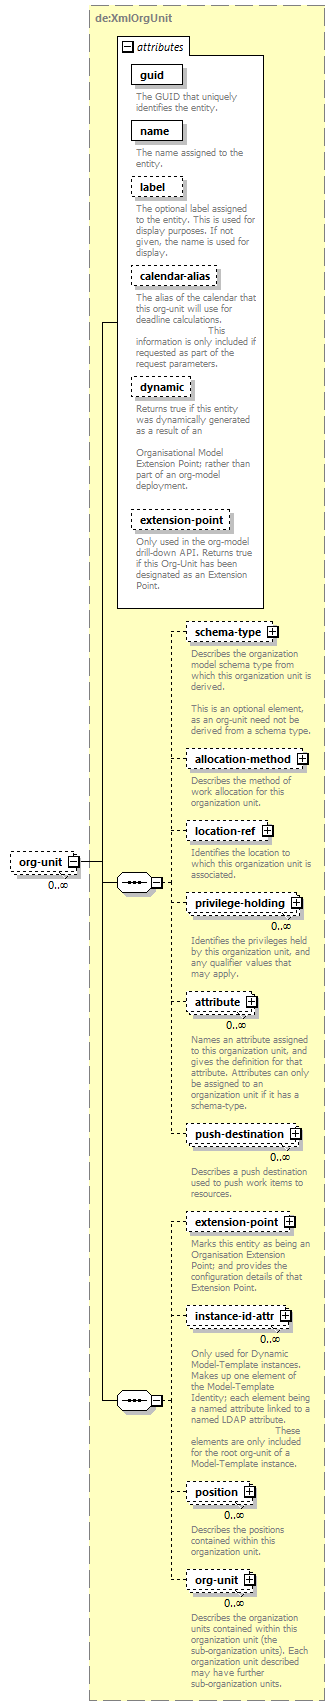 de-orgmodel-service_diagrams/de-orgmodel-service_p15.png